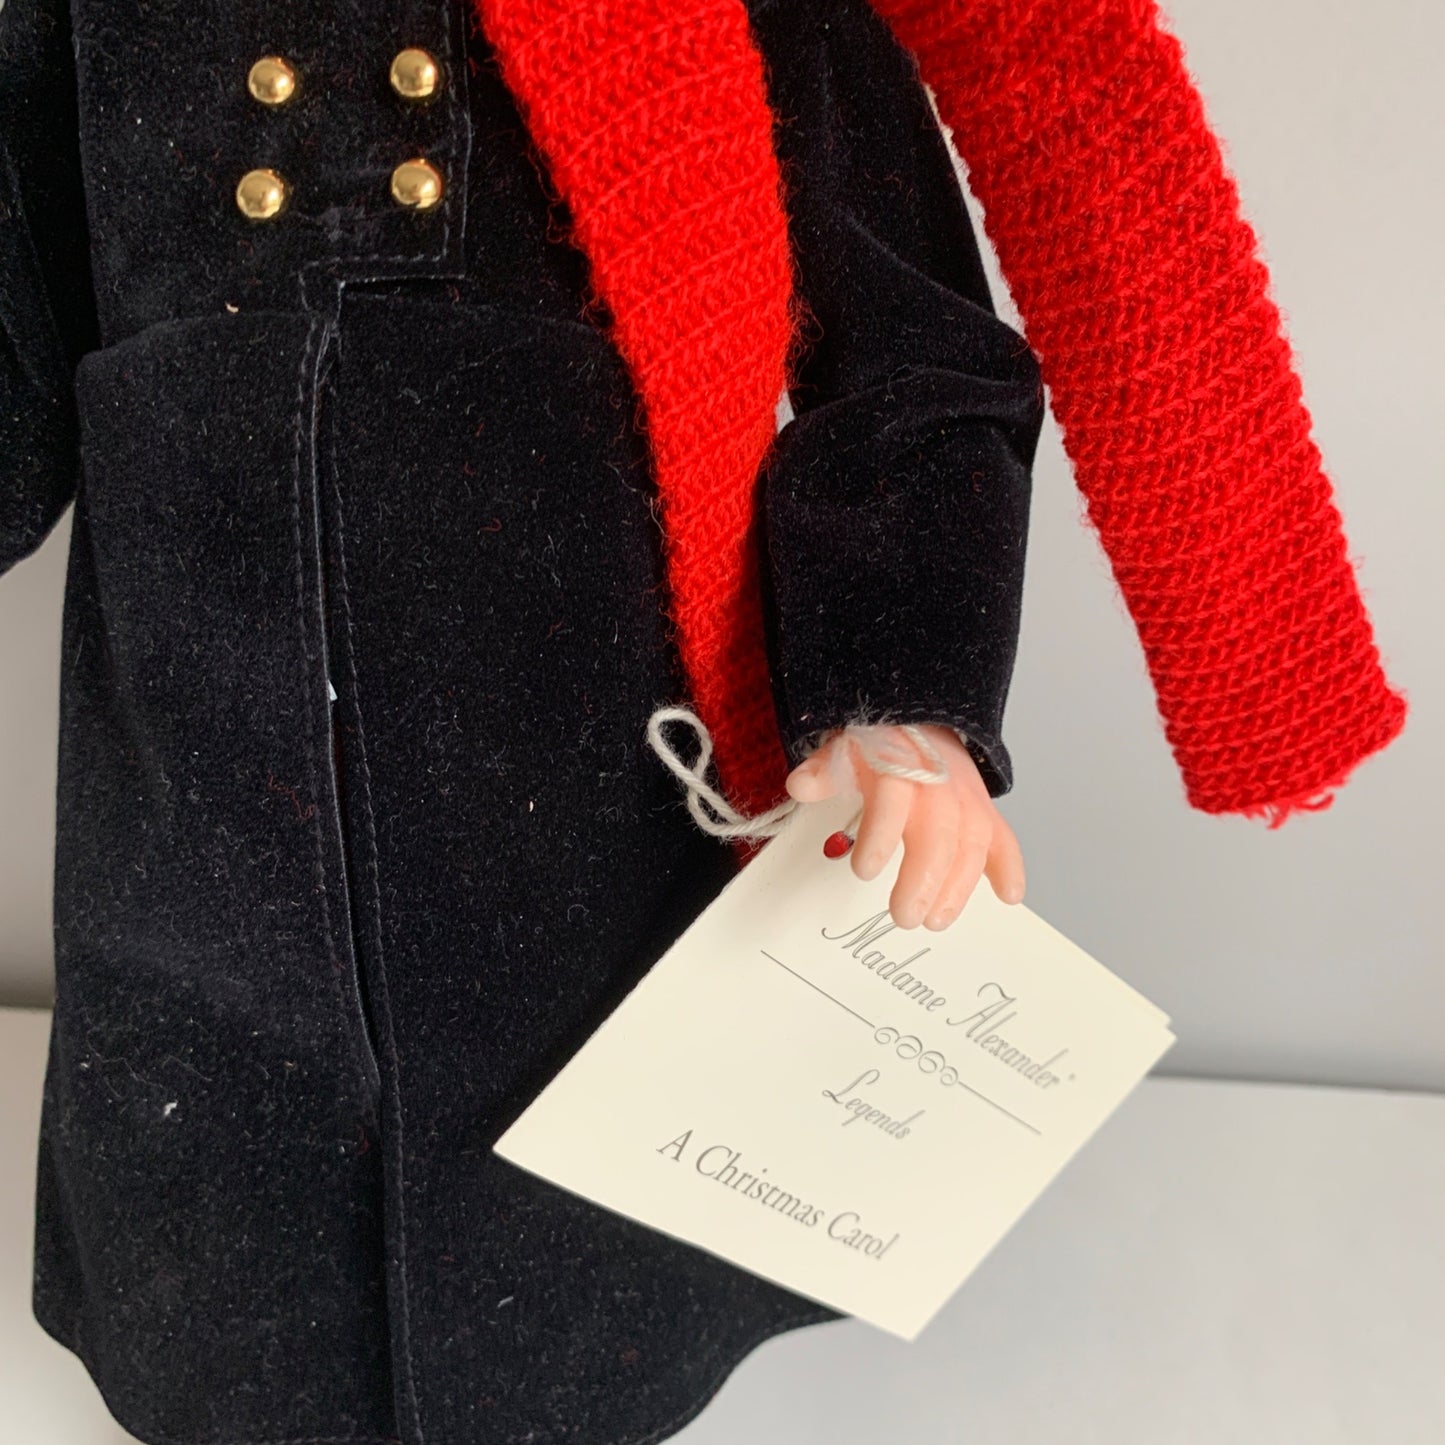 Madame Alexander Scrooge Doll with Box Vintage